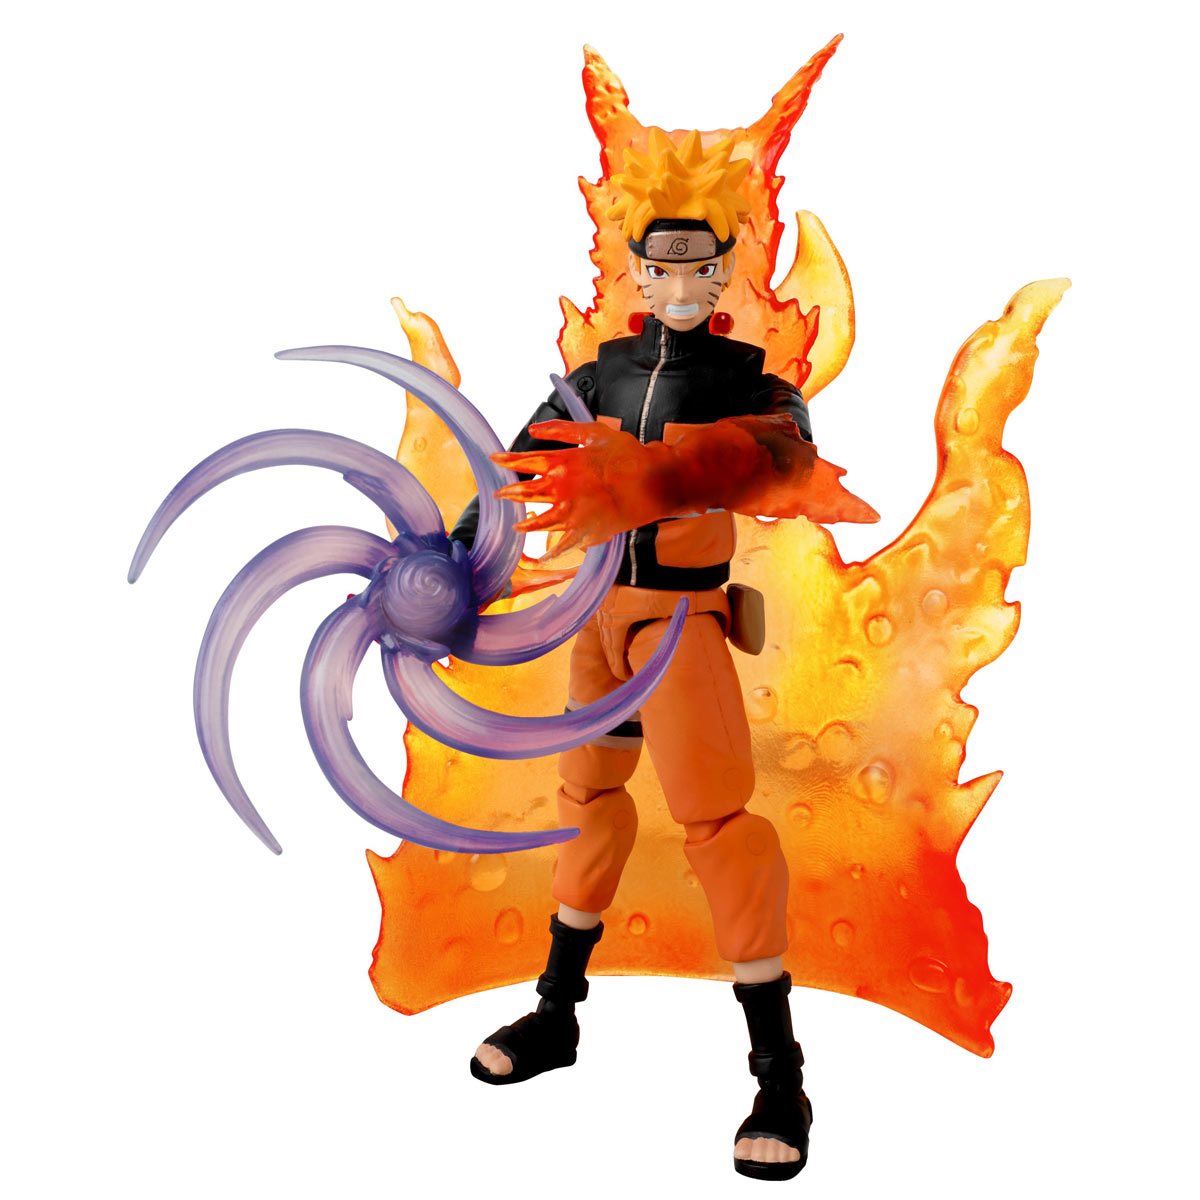 Naruto Shippuden - Anime Heroes Beyond Naruto Tailed Beast Cloak Action figure